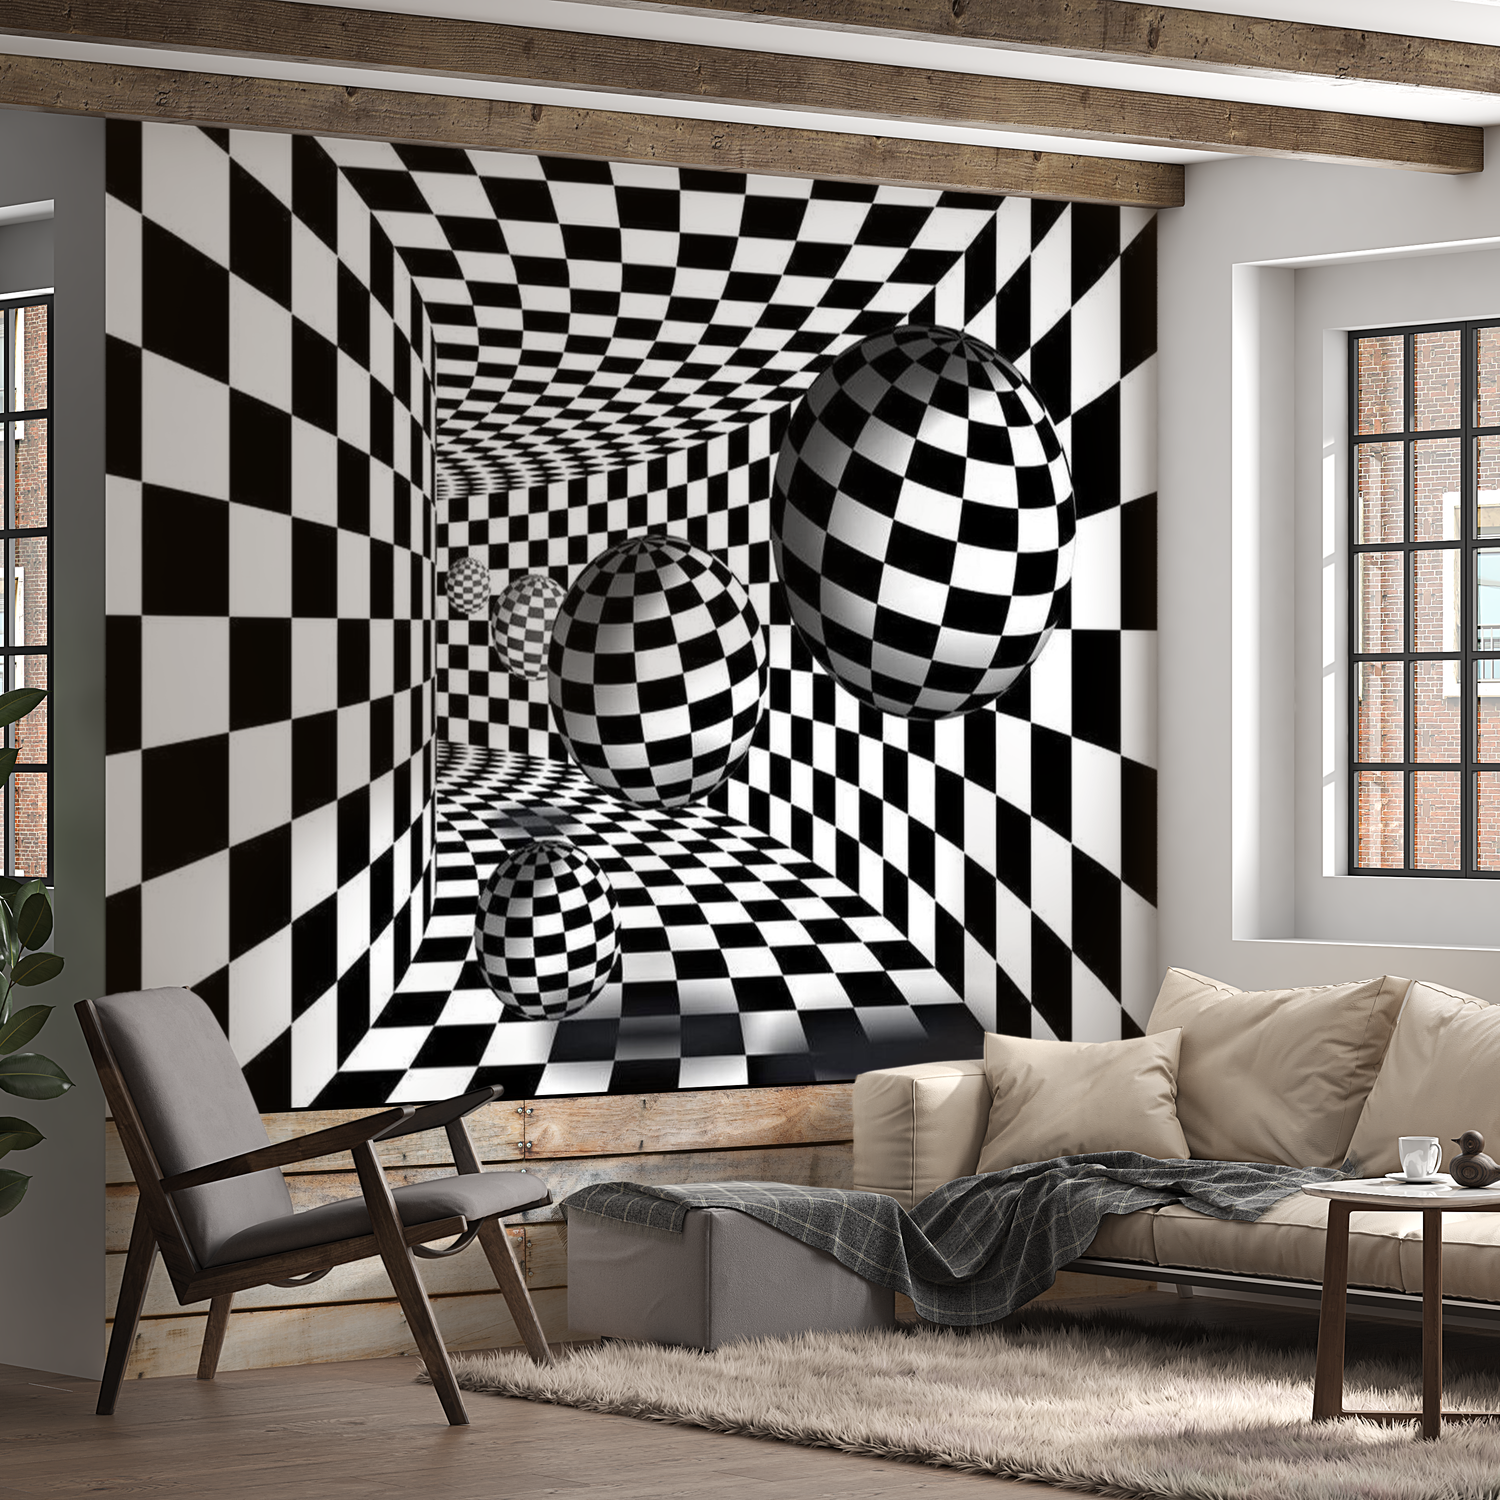 3D Illusion Wallpaper Wall Mural - Black & White Corridor 39"Wx27"H